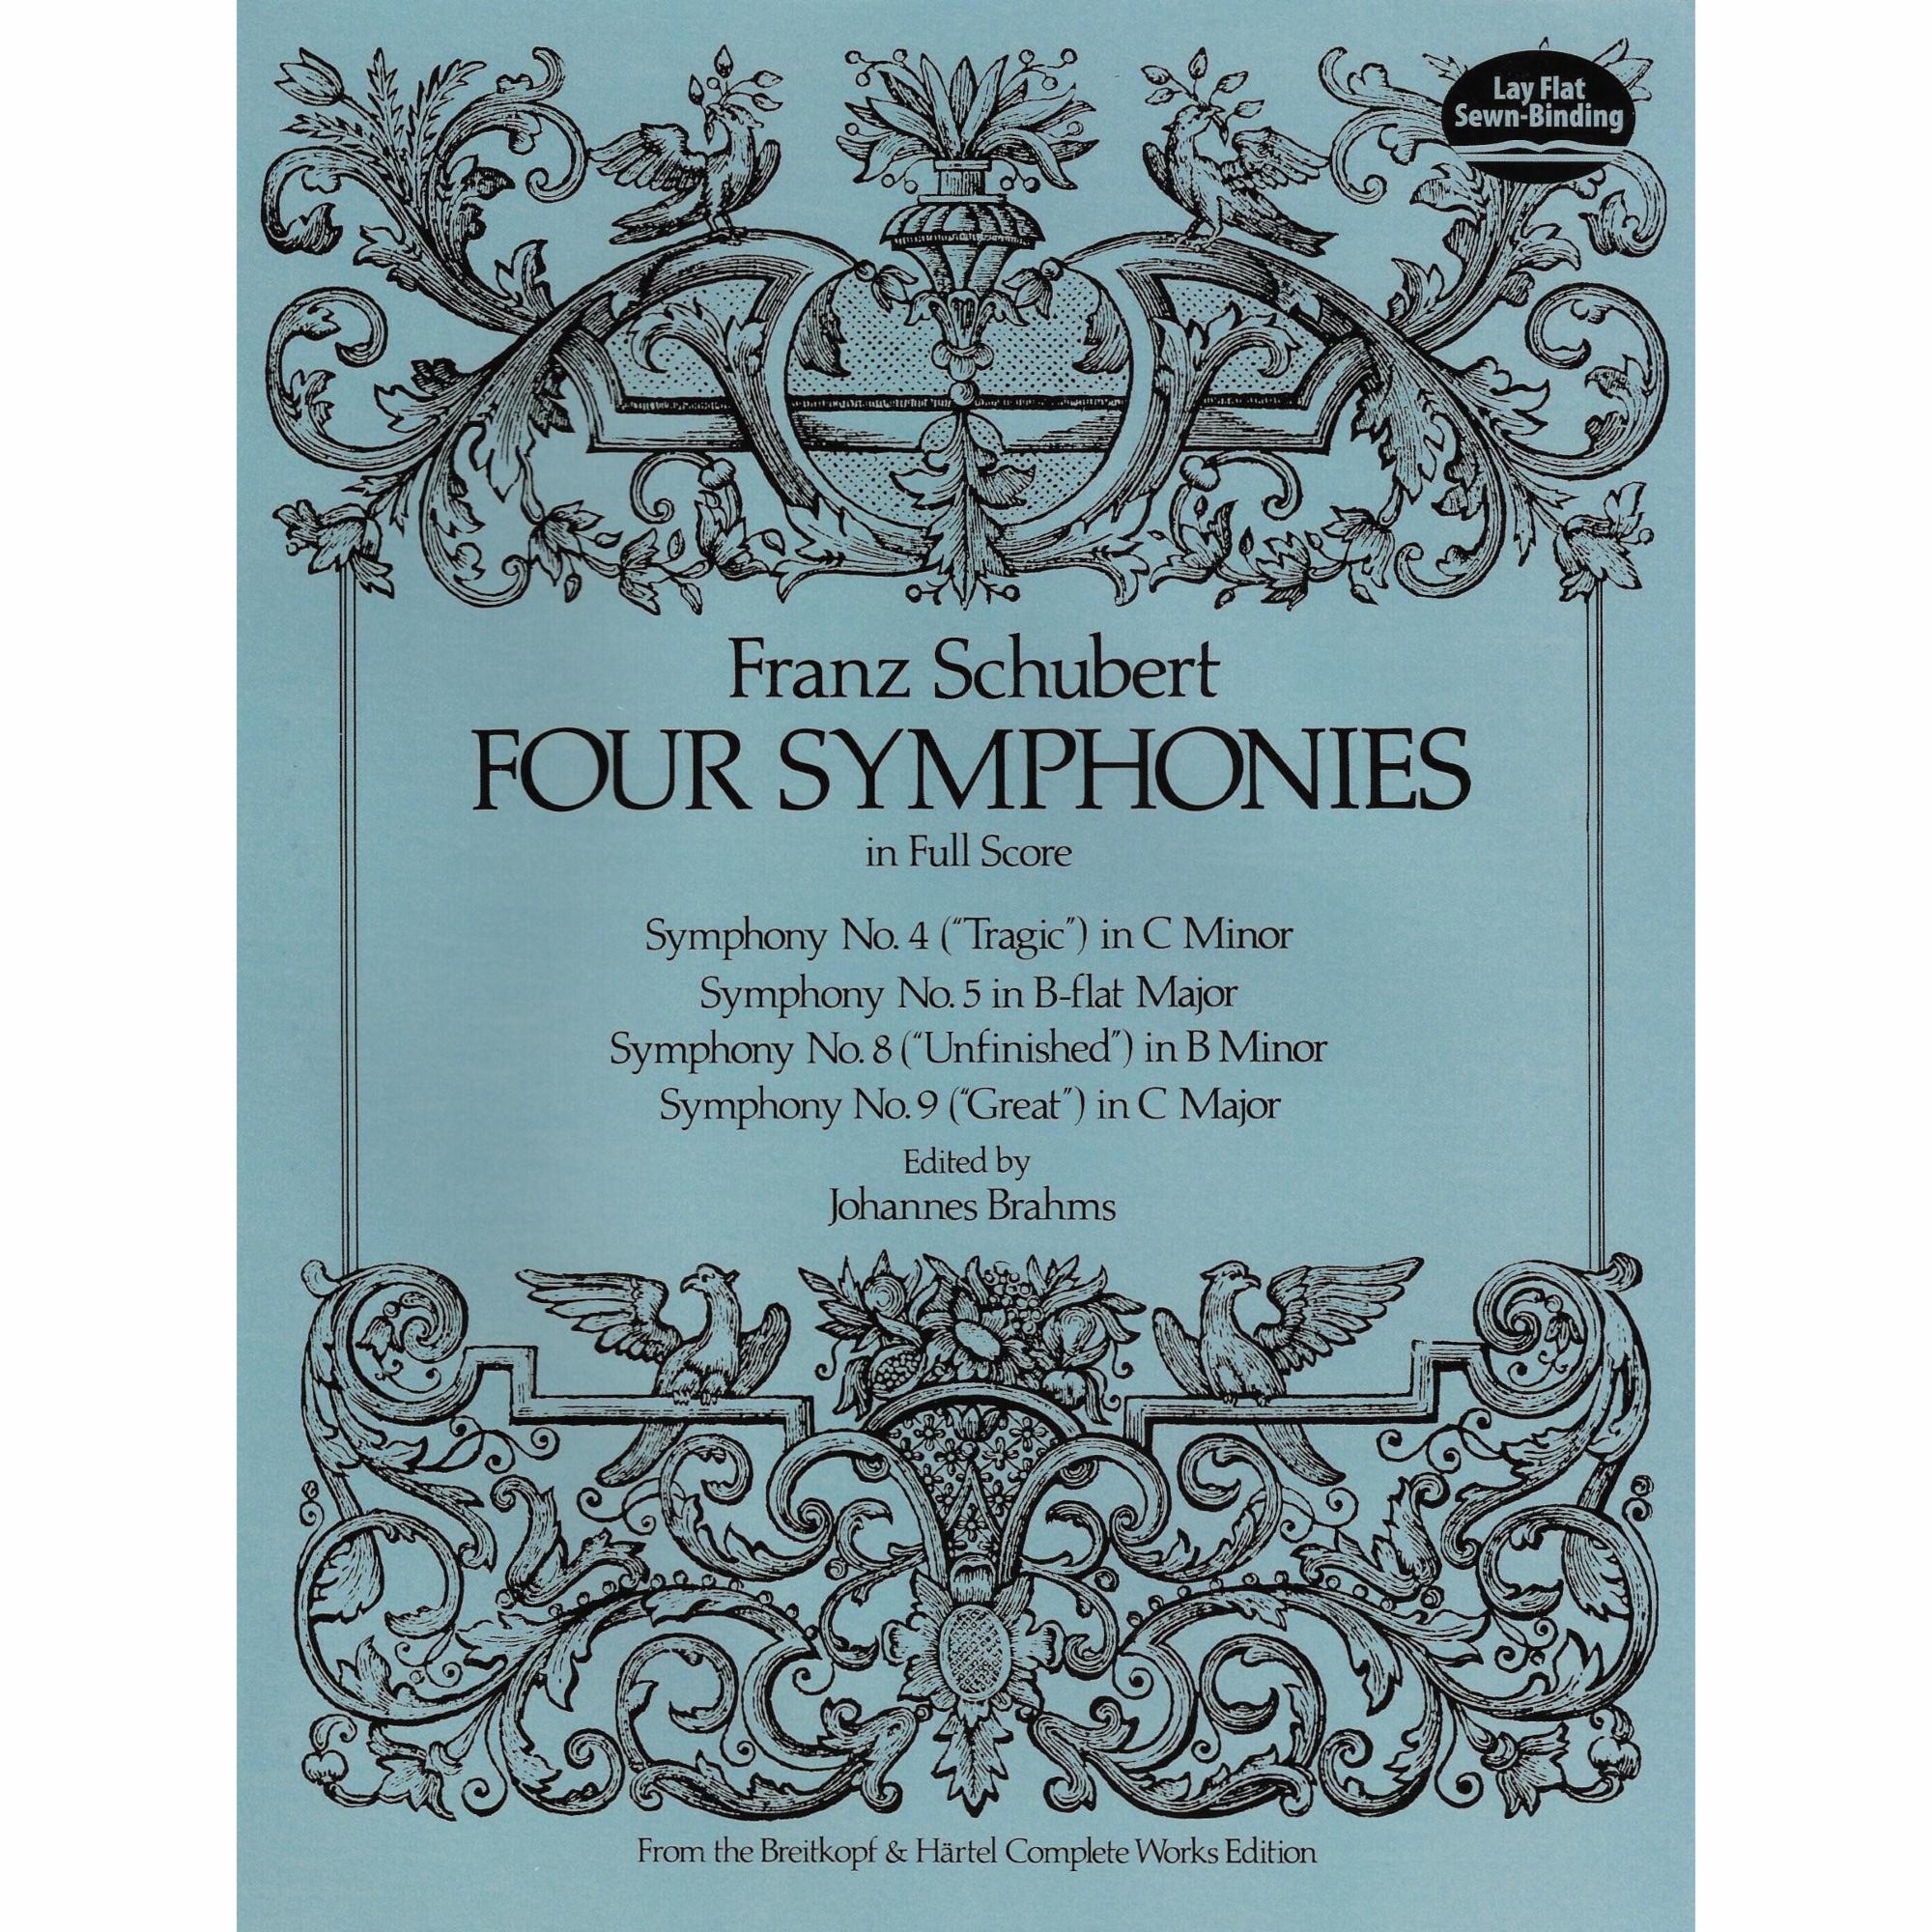 Schubert -- Four Symphonies in Full Score